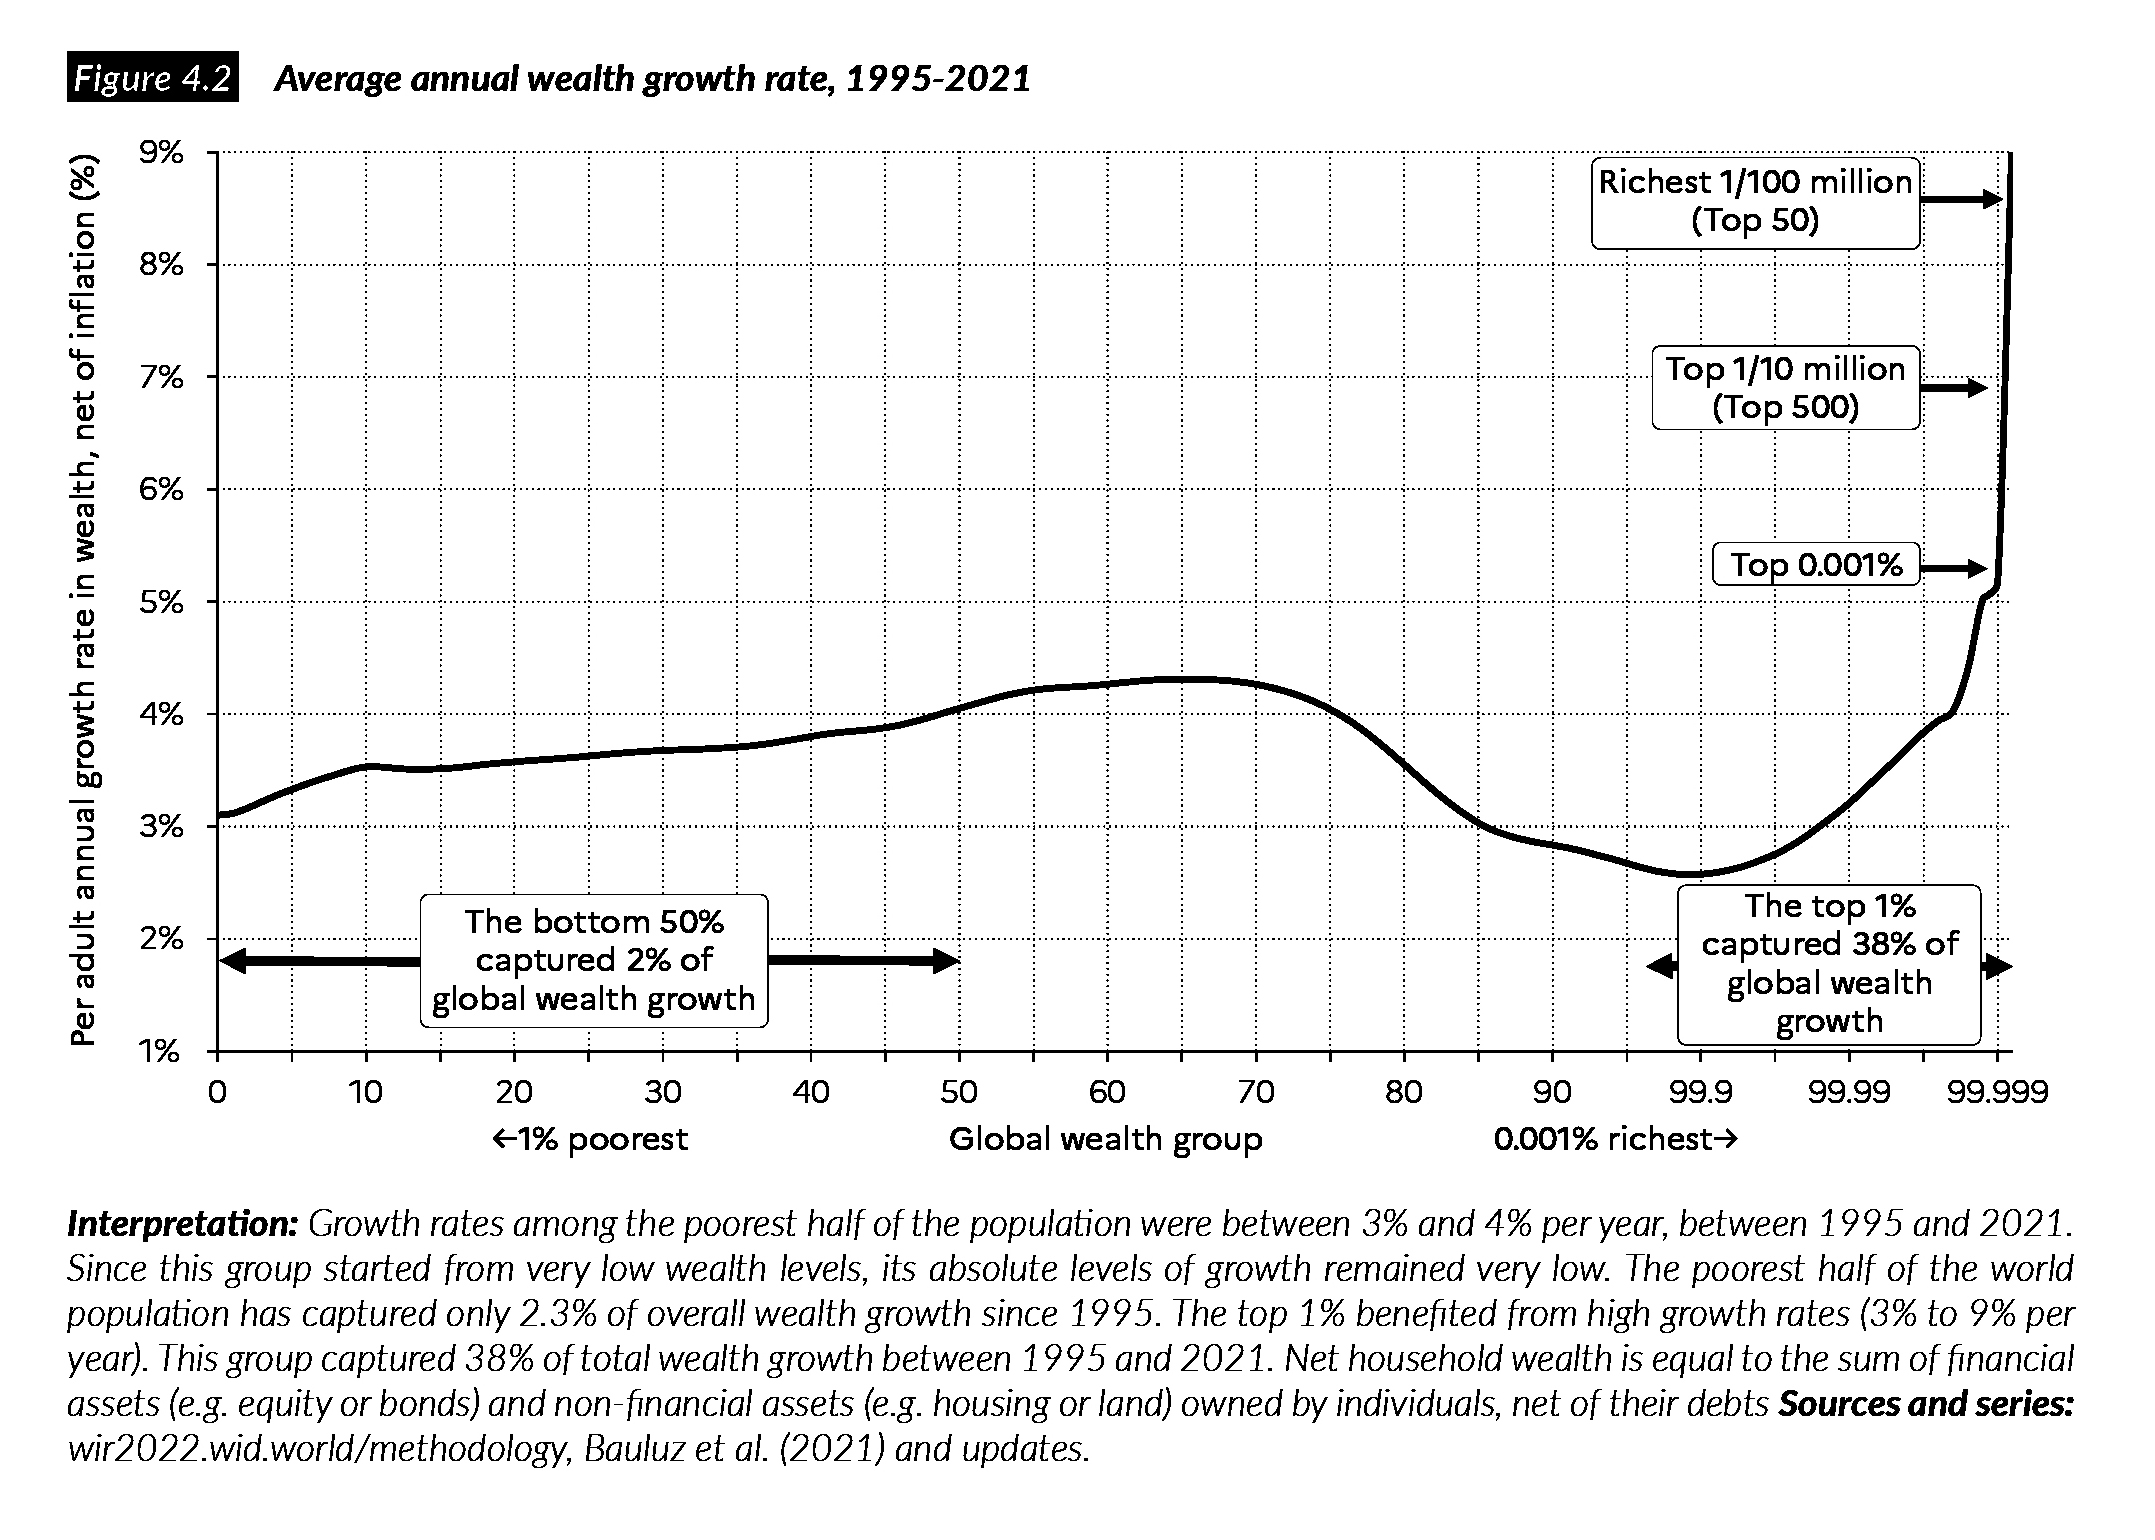 Chancel, L., Piketty, T., Saez, E., Zucman, G. et al. (2022). World Inequality Report 2022, World Inequality Lab. https://wid.world/news-article/world-inequality-report-2022/